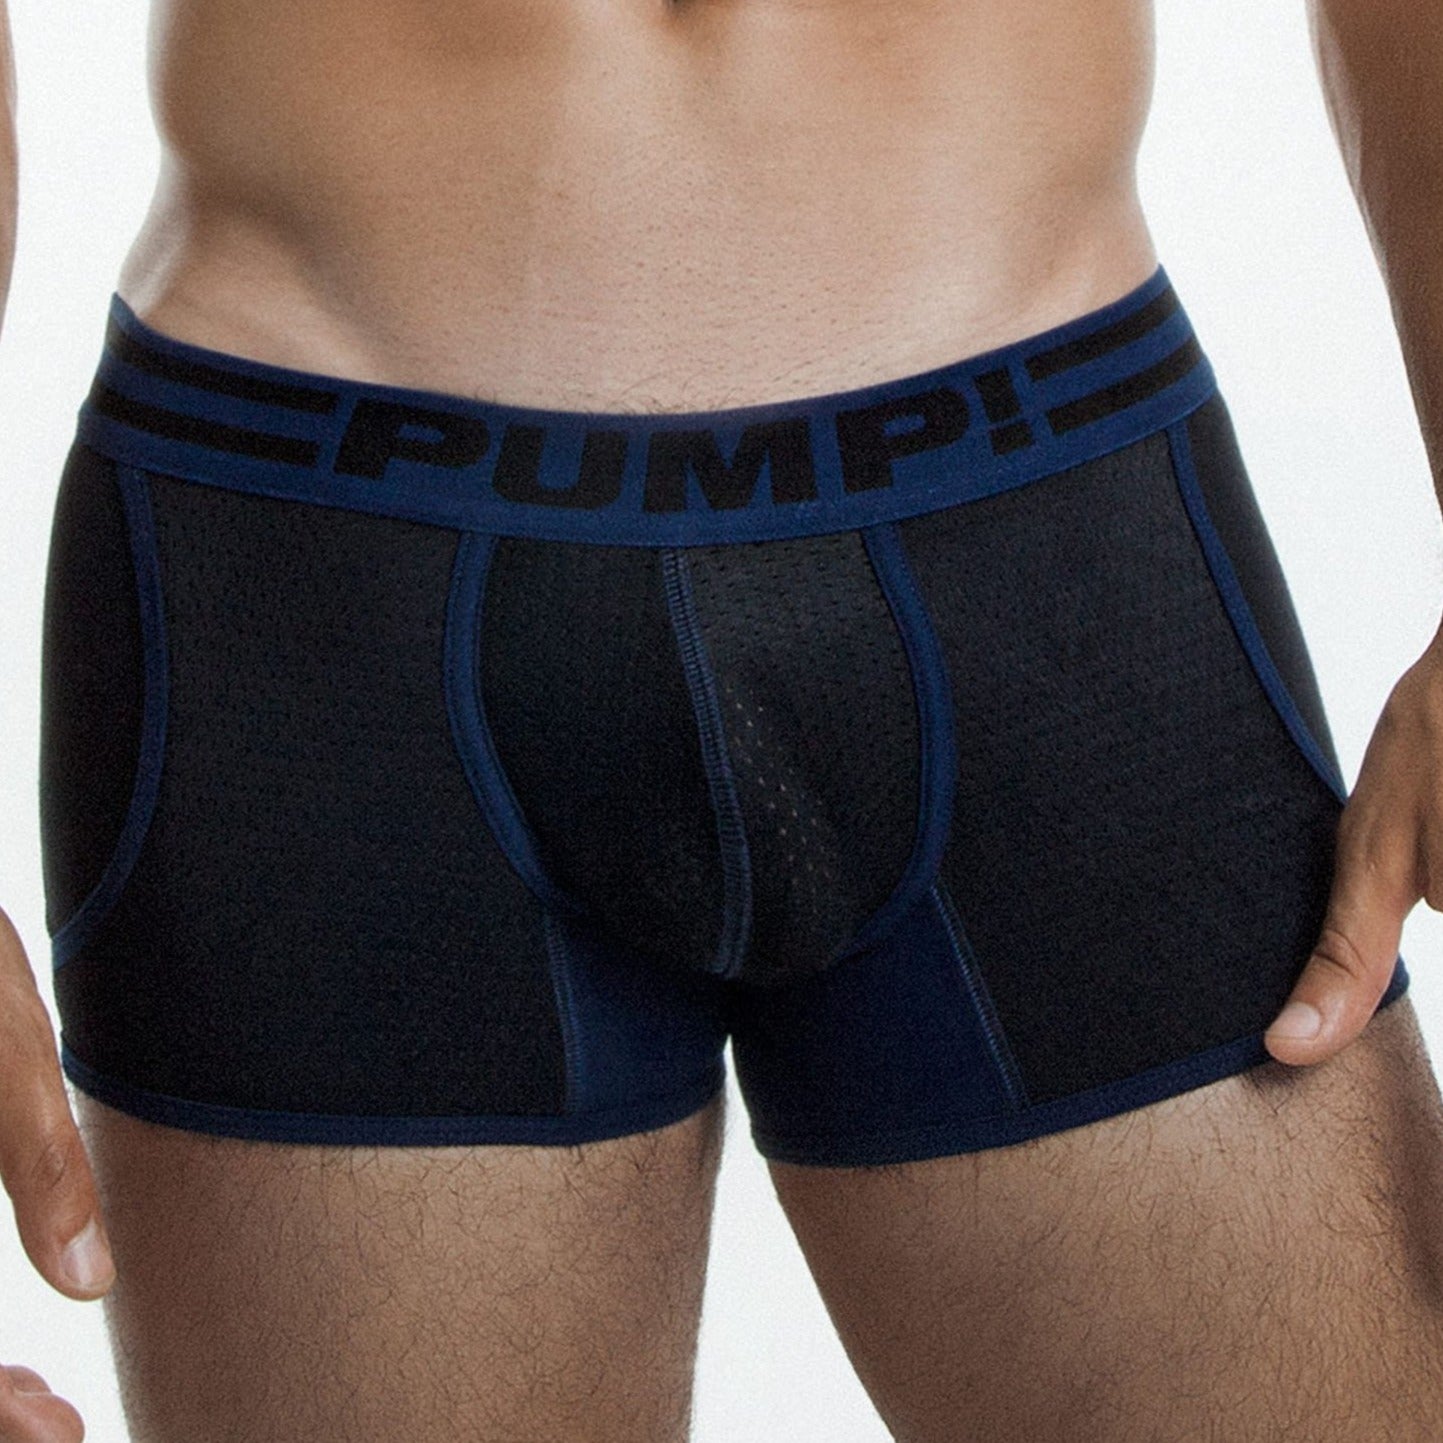 Midnight Jogger Front by PUMP! Underwear at Trenderwear.com